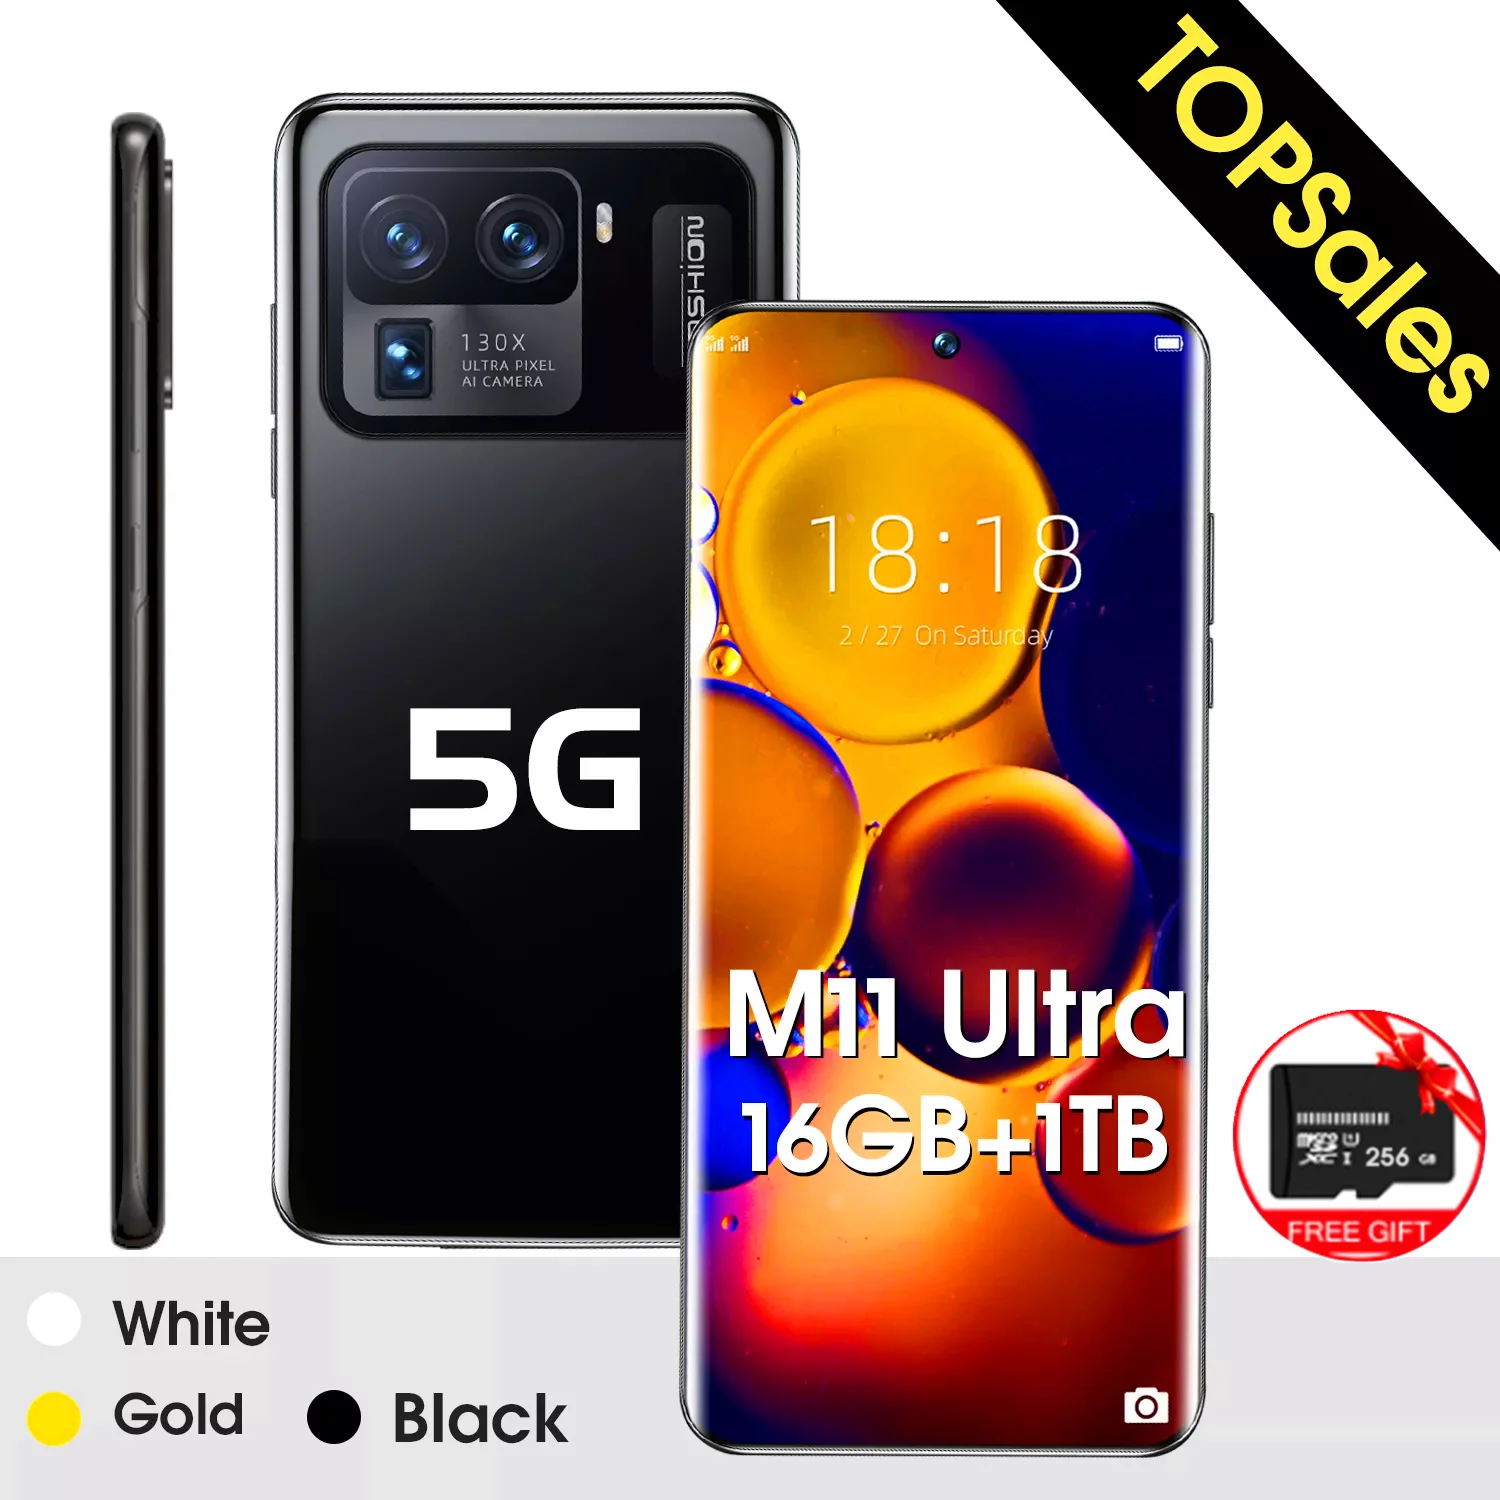 

Global Version M11 Ultra Smartphone 16GB+1TB Celulares Android Celular Qualcomm Snapdragon 888 Dual Card Unlocked Mobile Phone